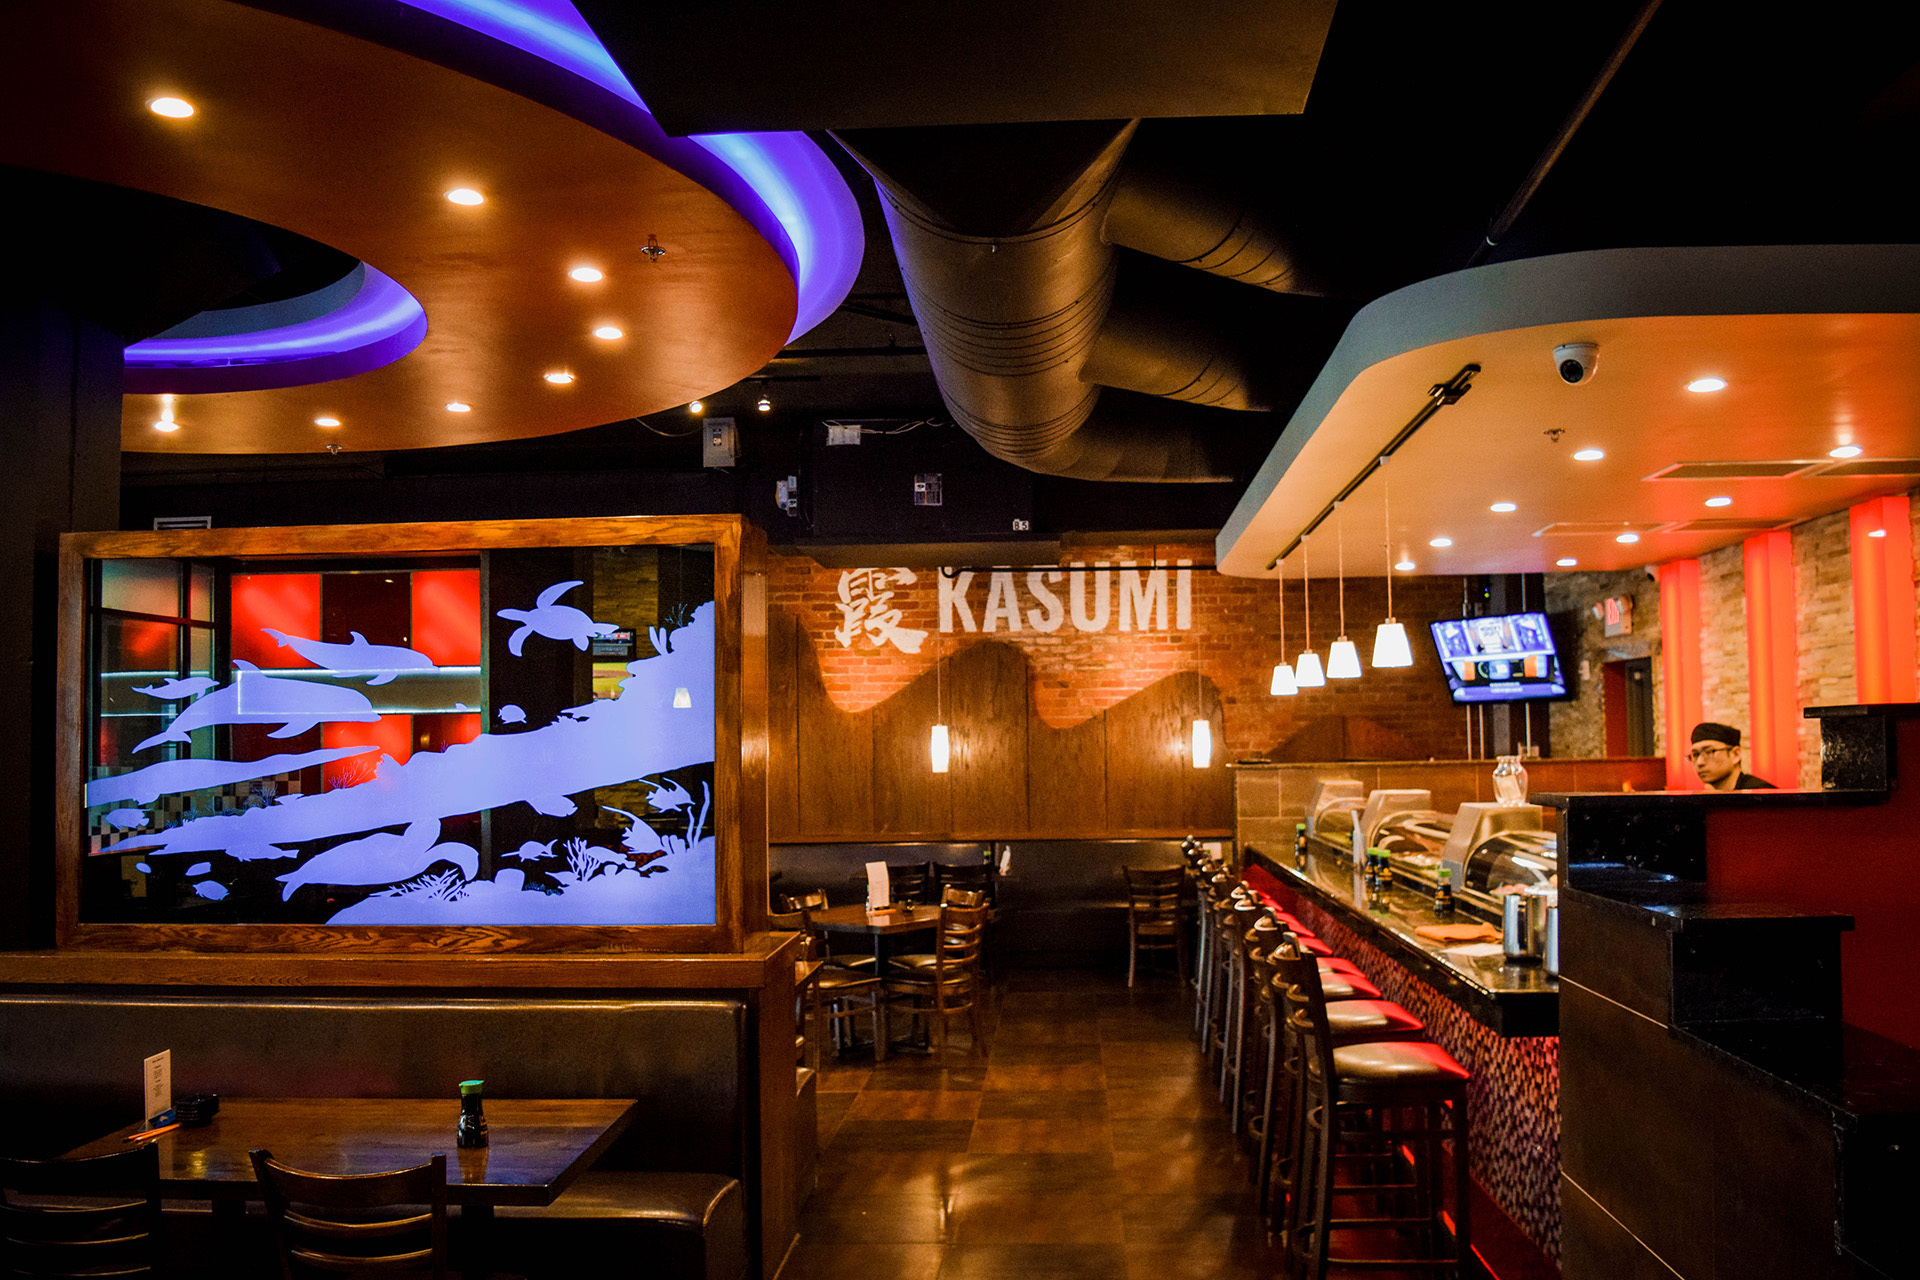 Kasumi Sushi